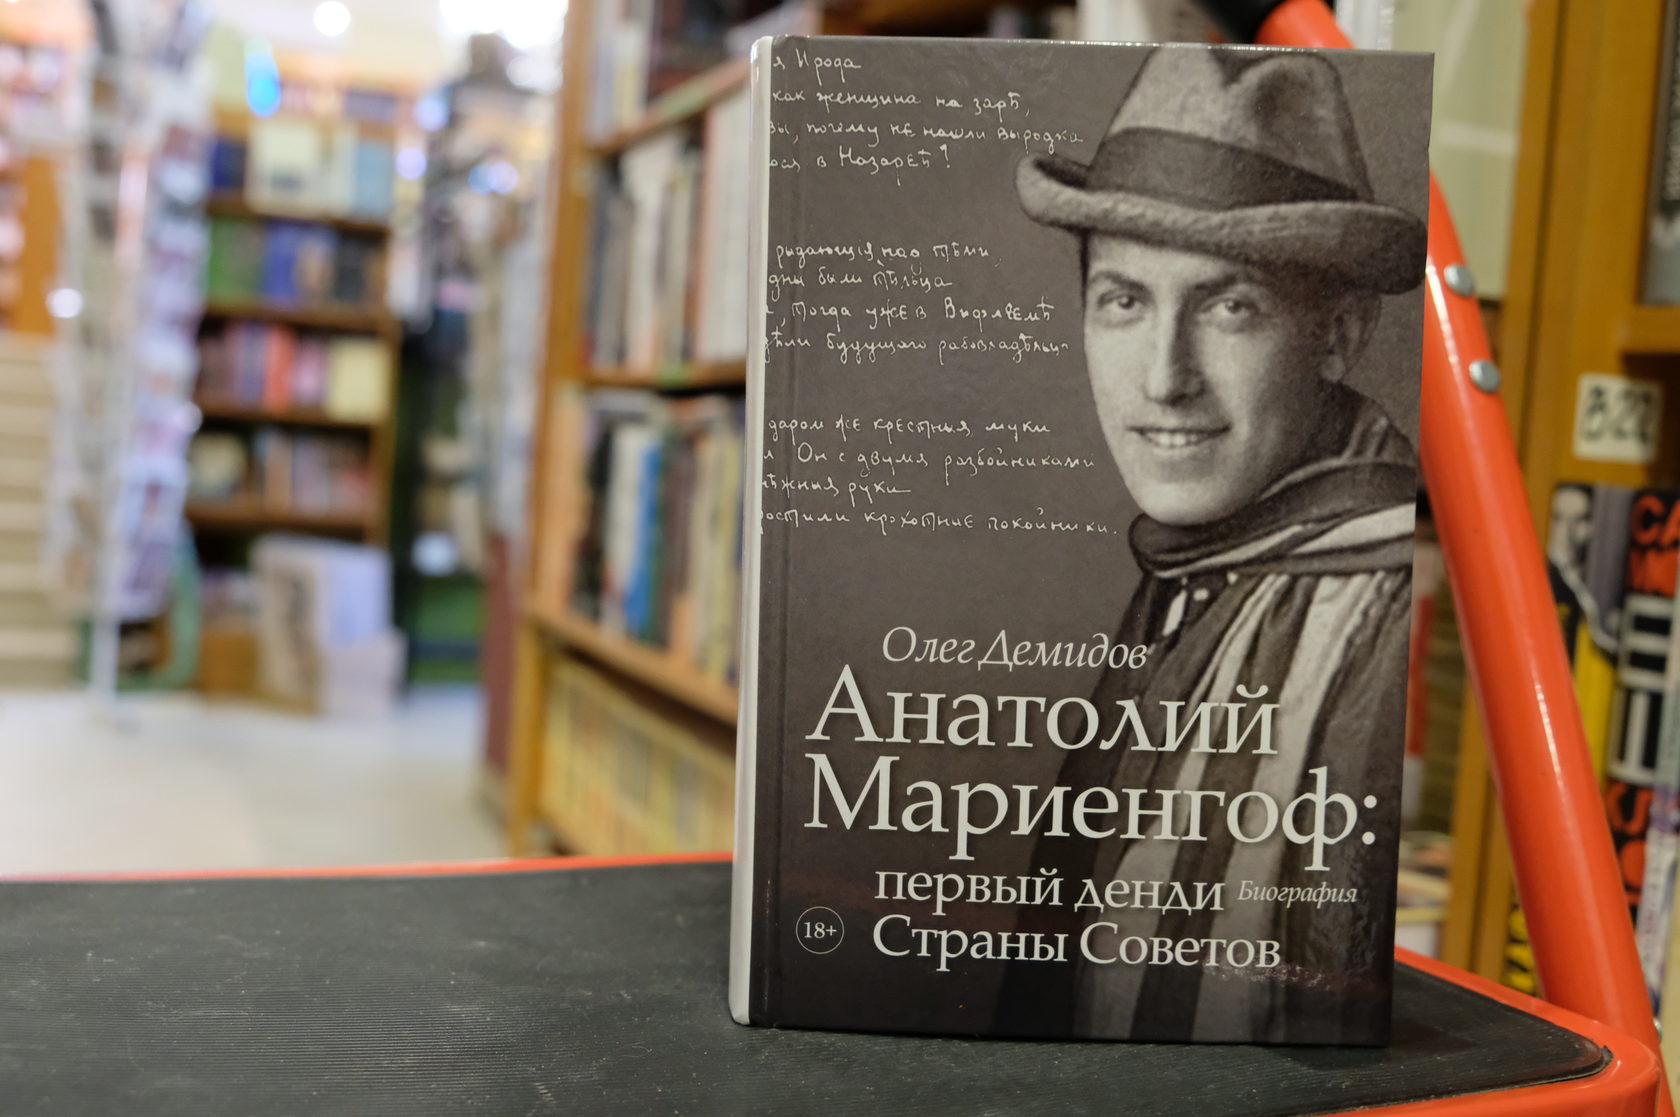 Книгу выпускника МГПУ о Мариенгофе представили на «Культуре»